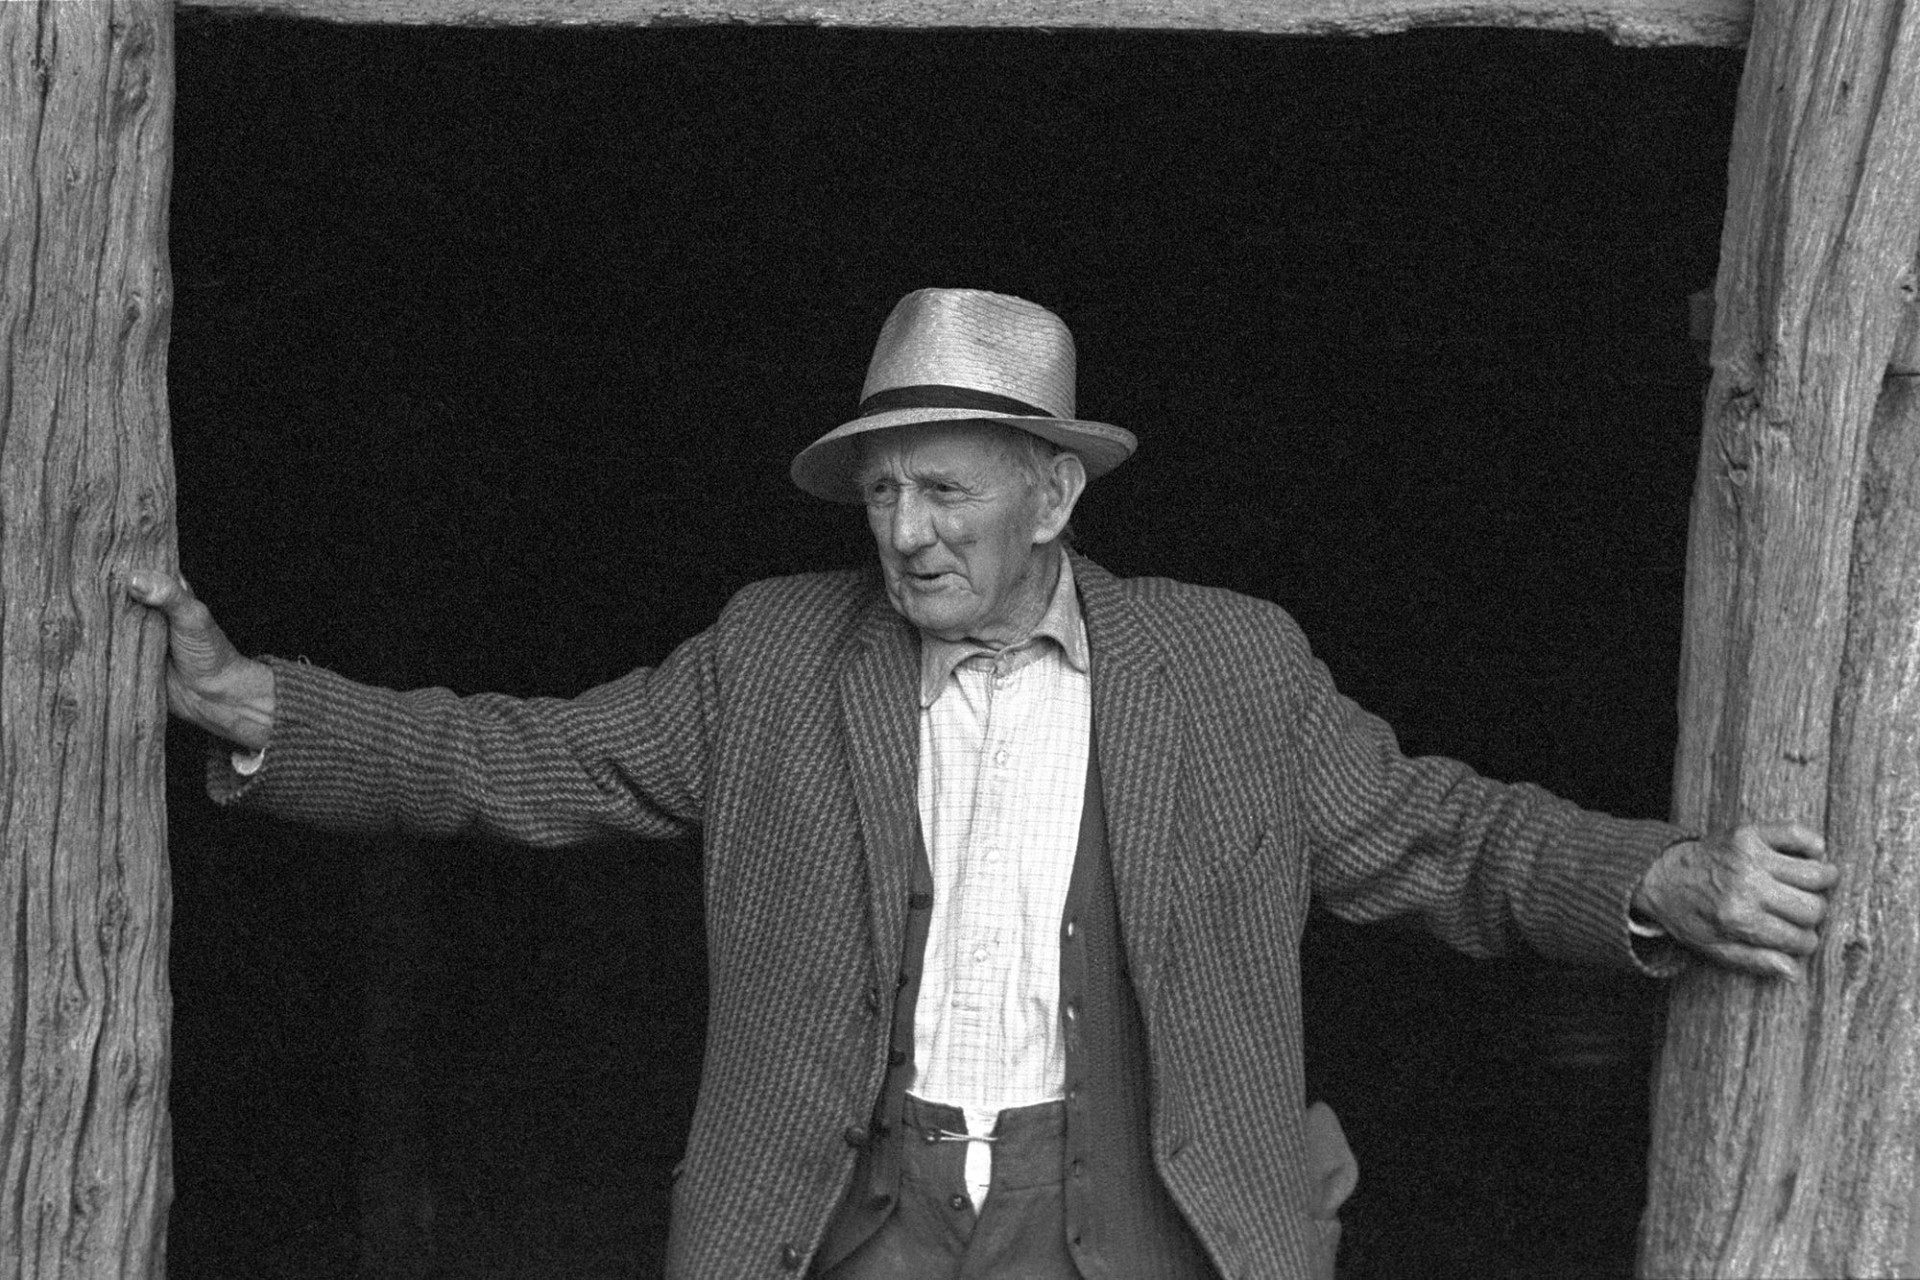 Man in straw hat at doorway of barn.
[Amos Oke standing in a doorway at Deckport Farm, Hatherleigh]